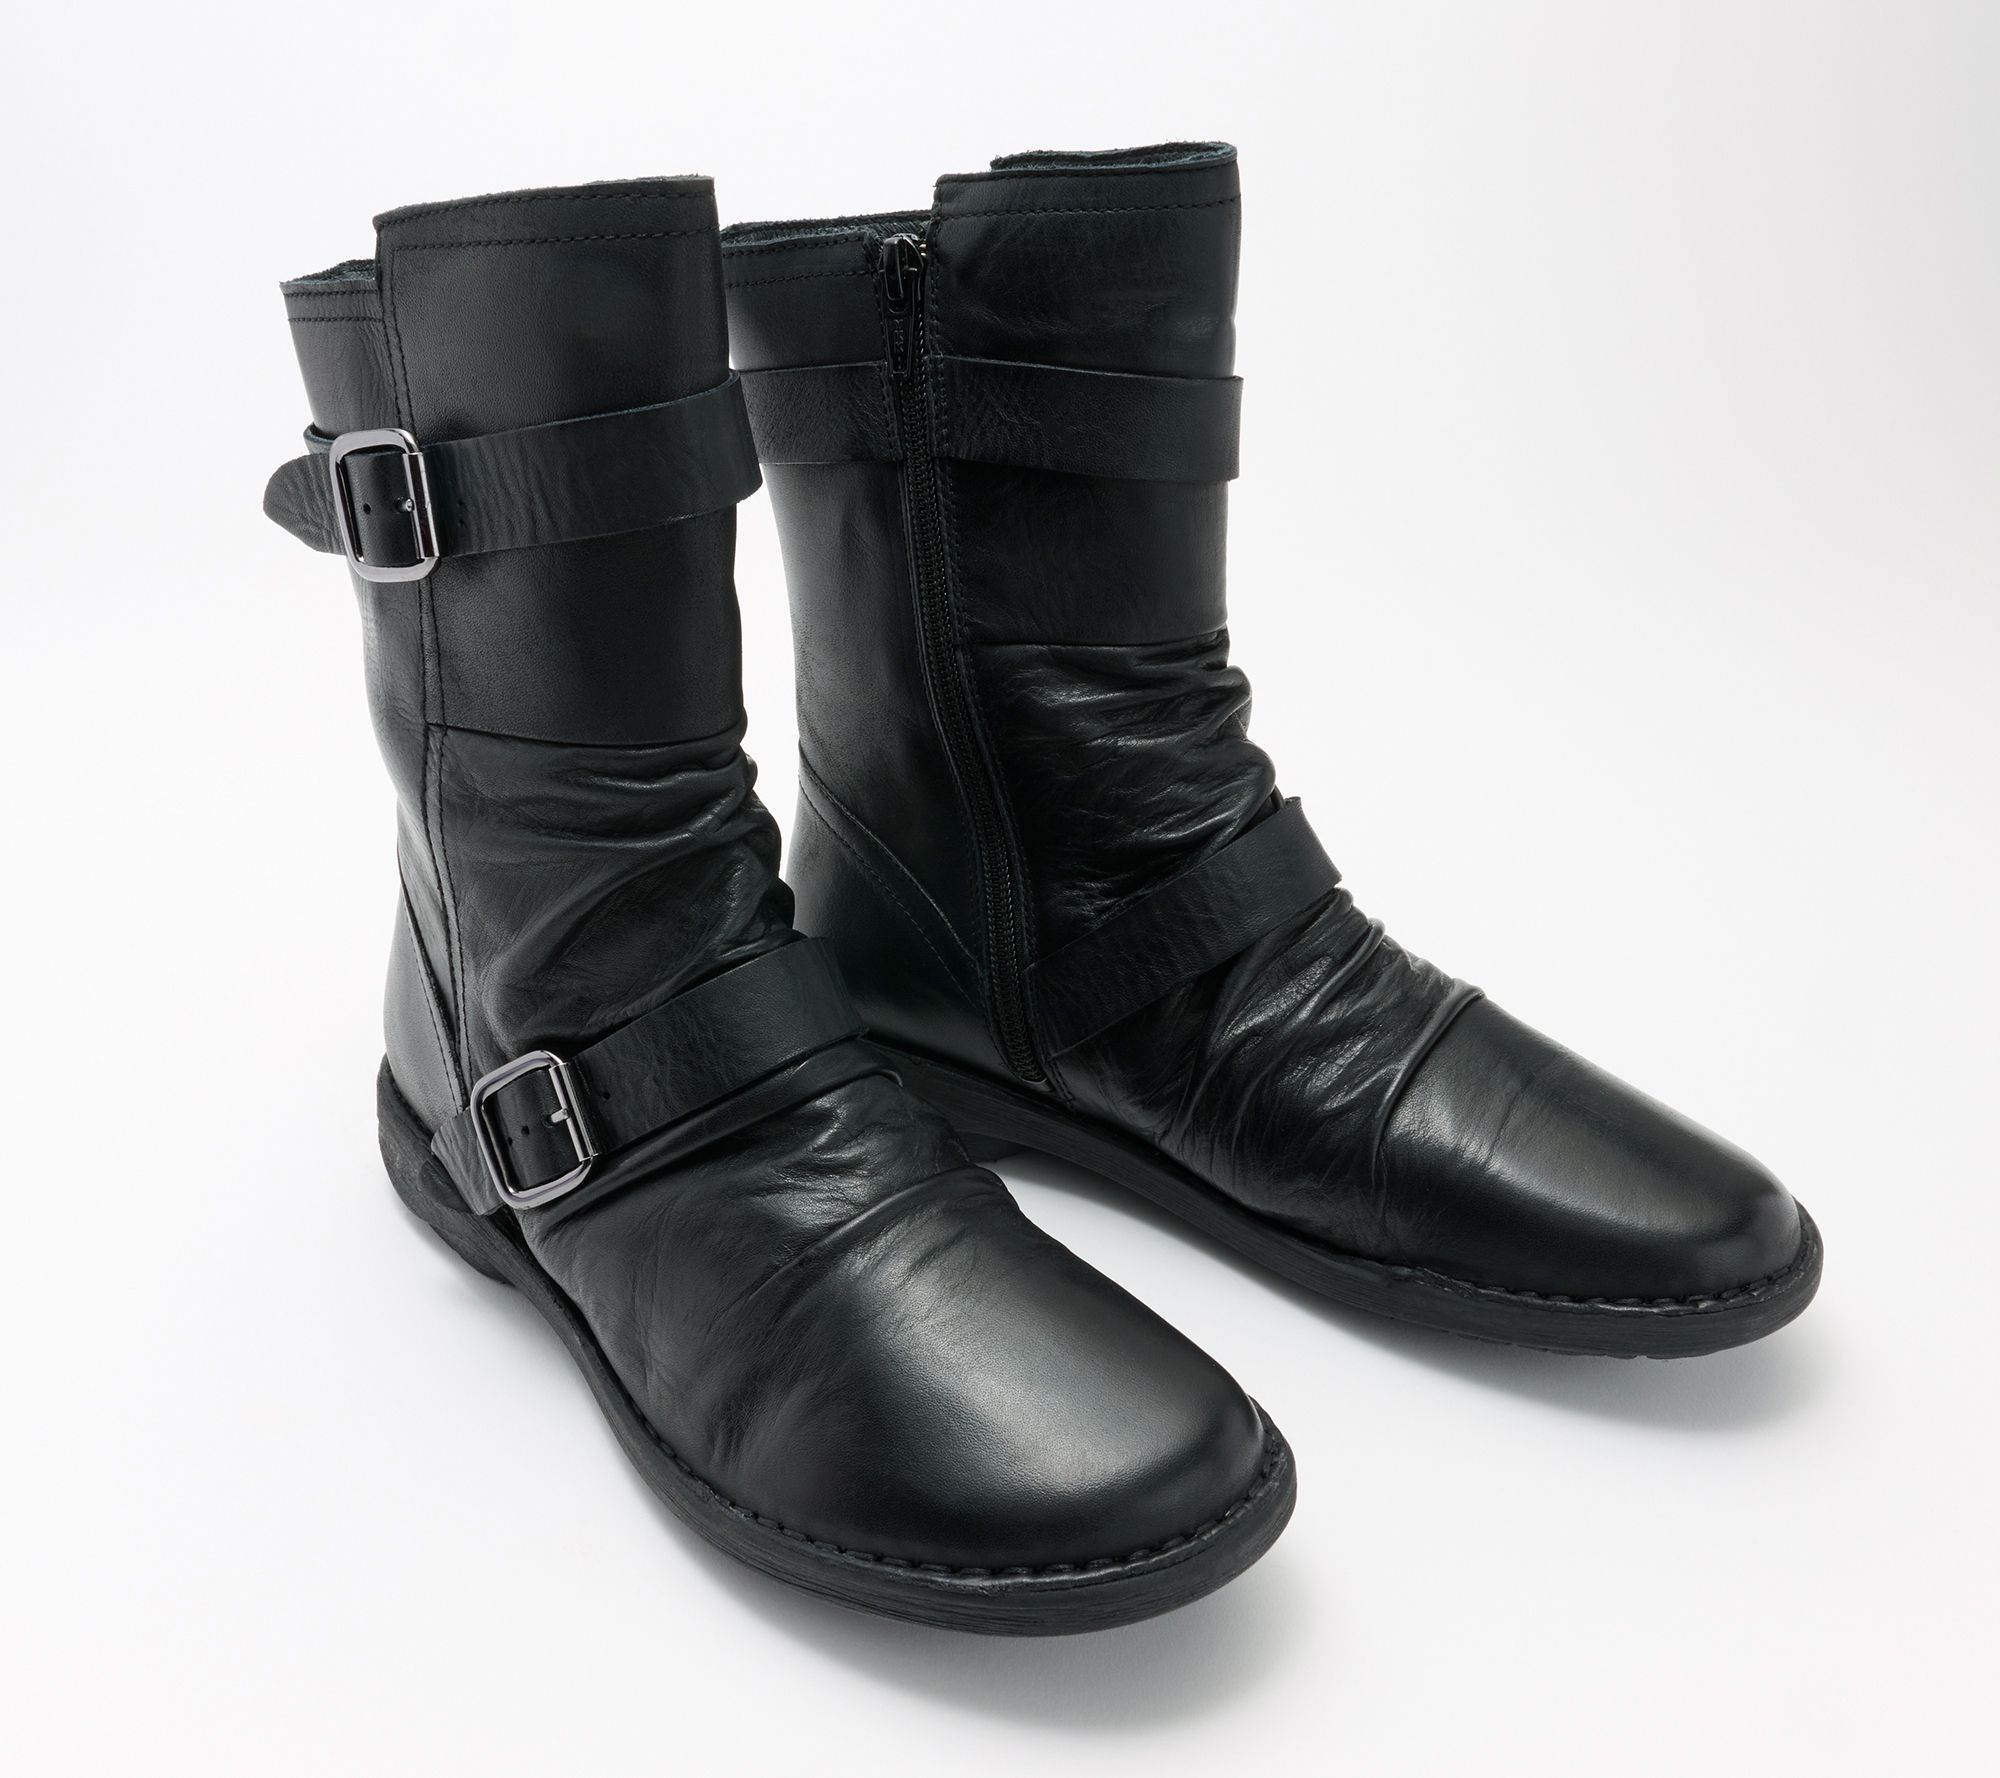 Miz Mooz Ankle Boots - Gem